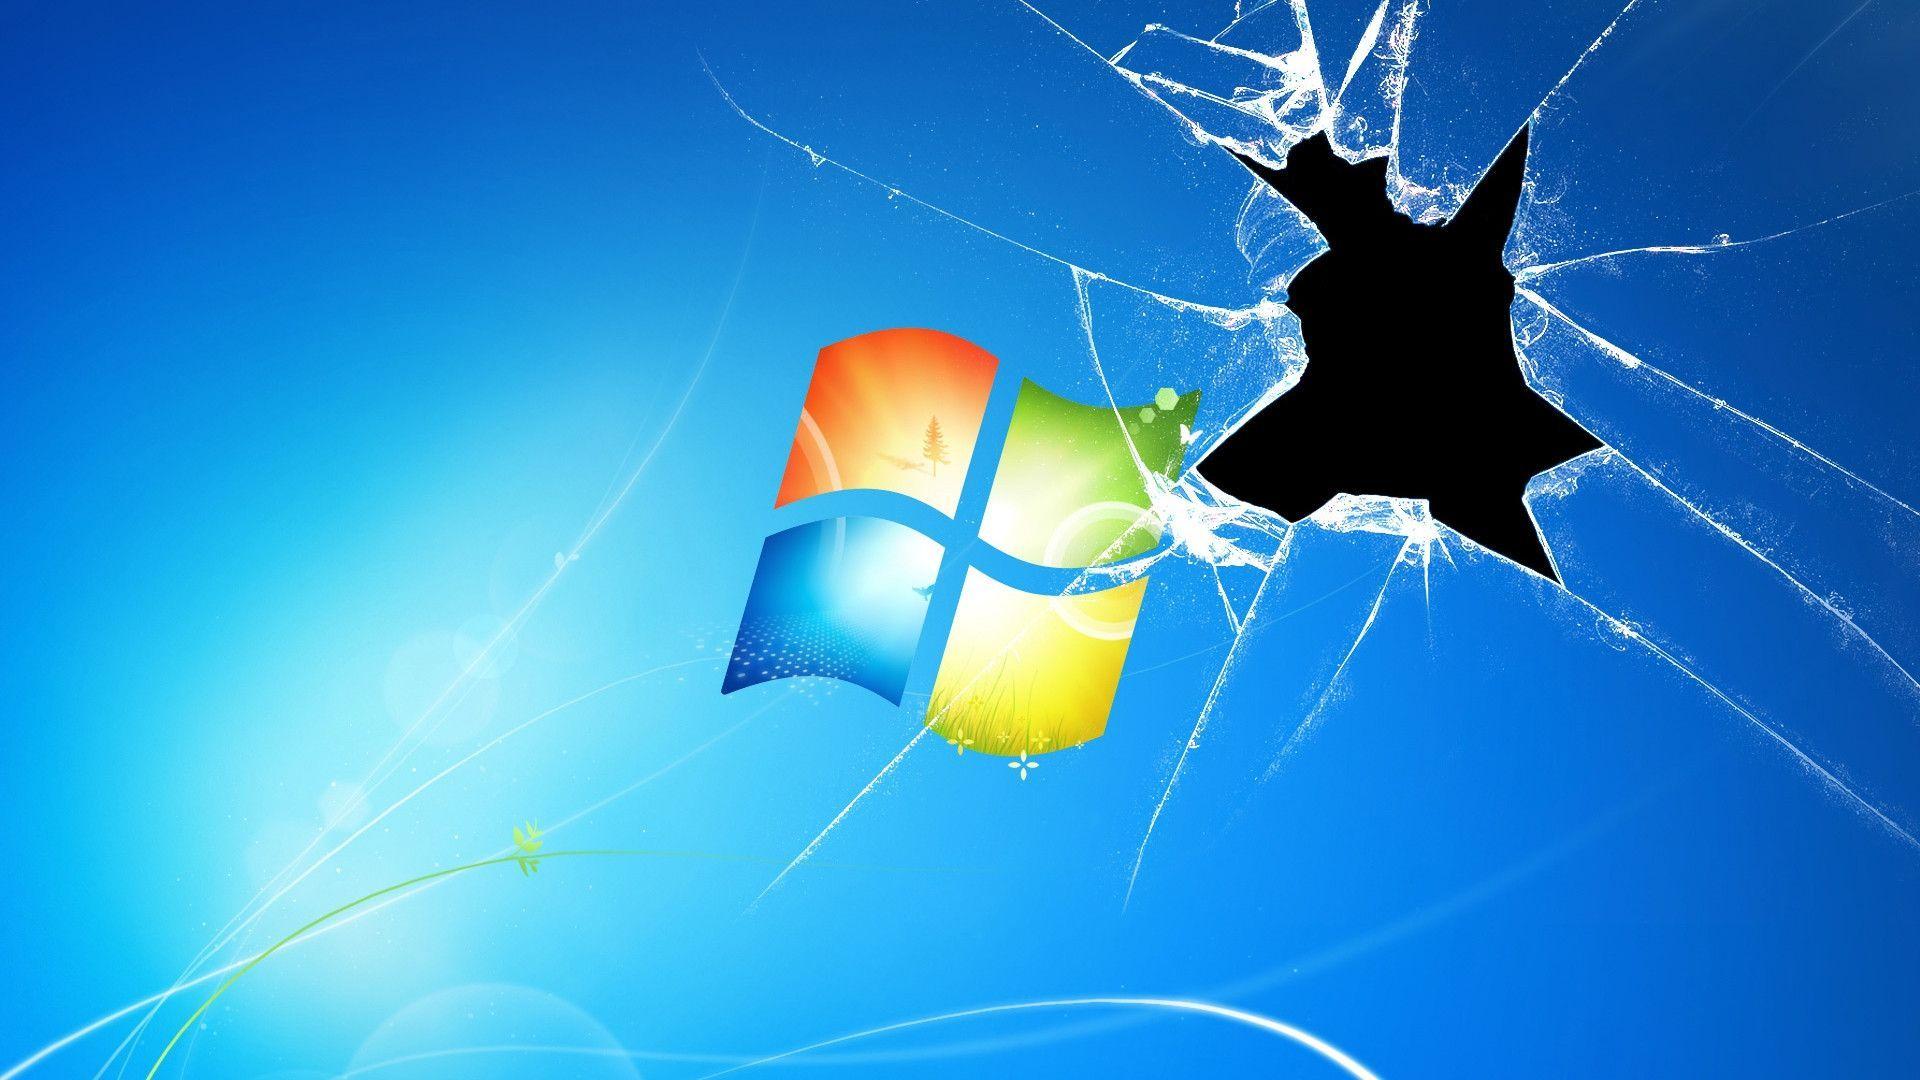 Cool Windows Desktop Background